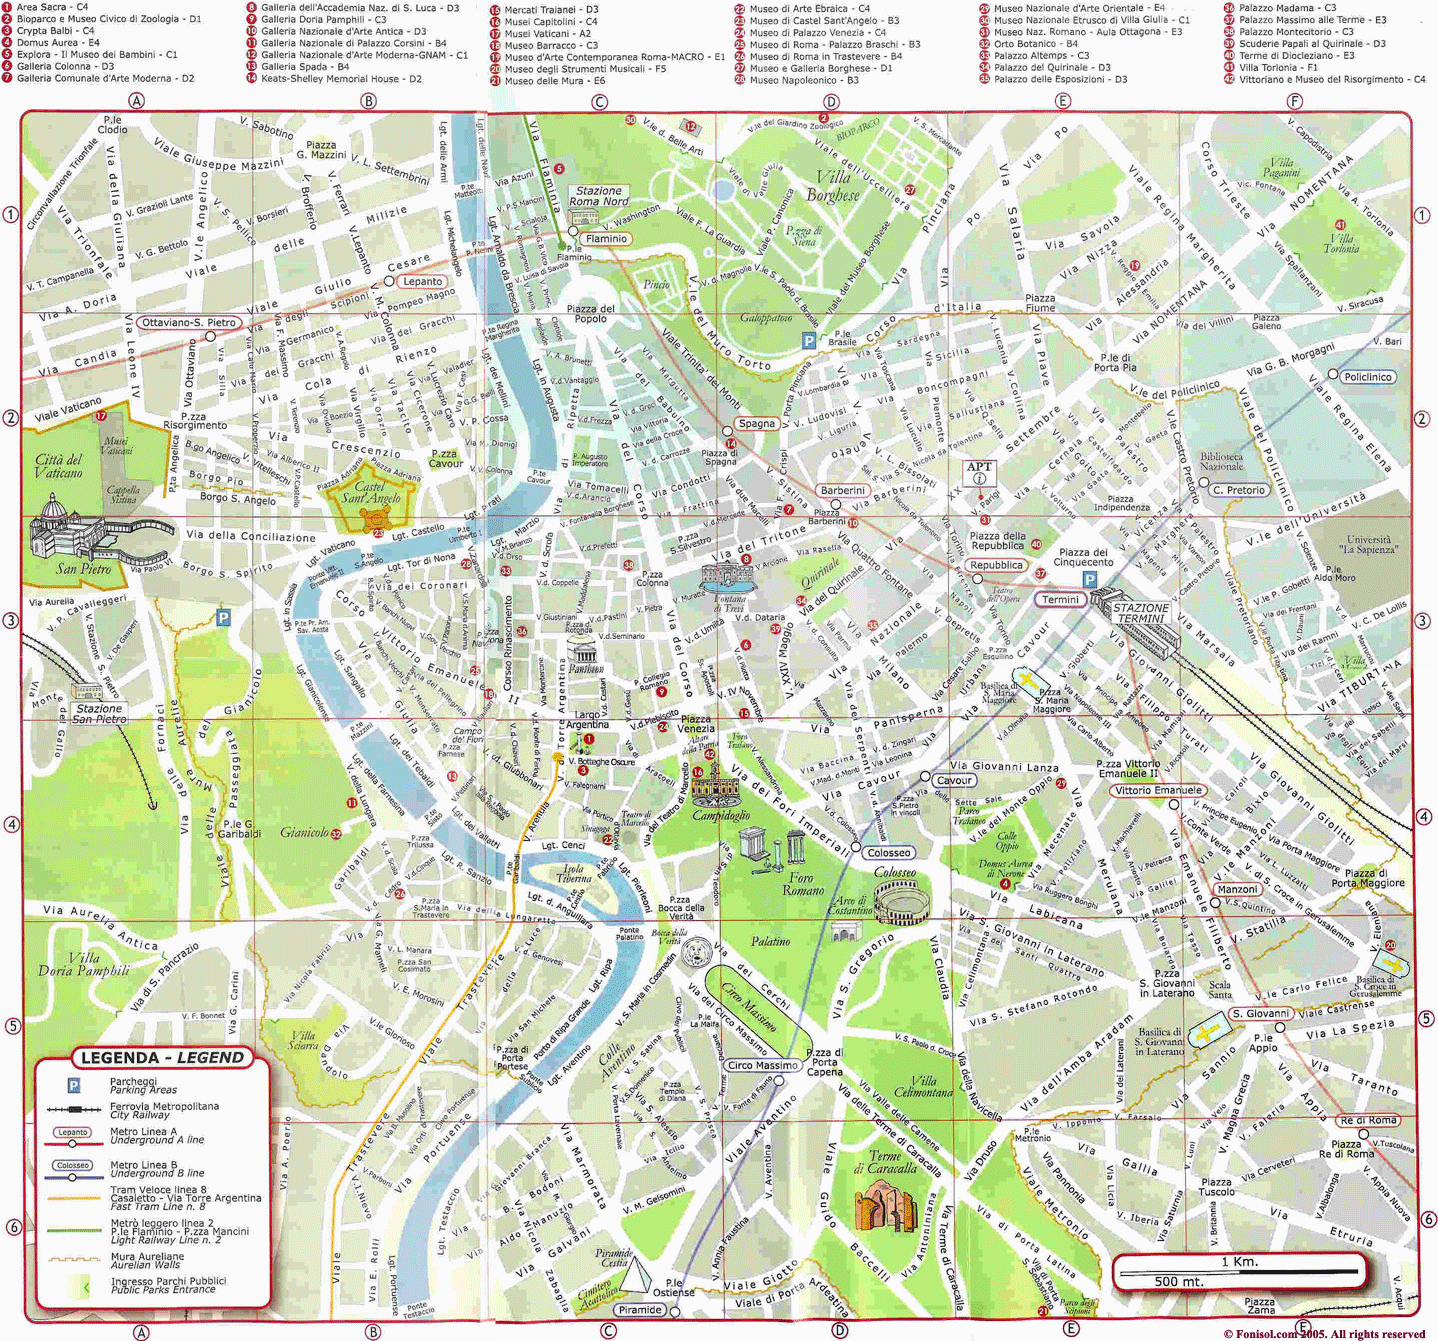 Map of Rome_0.jpg